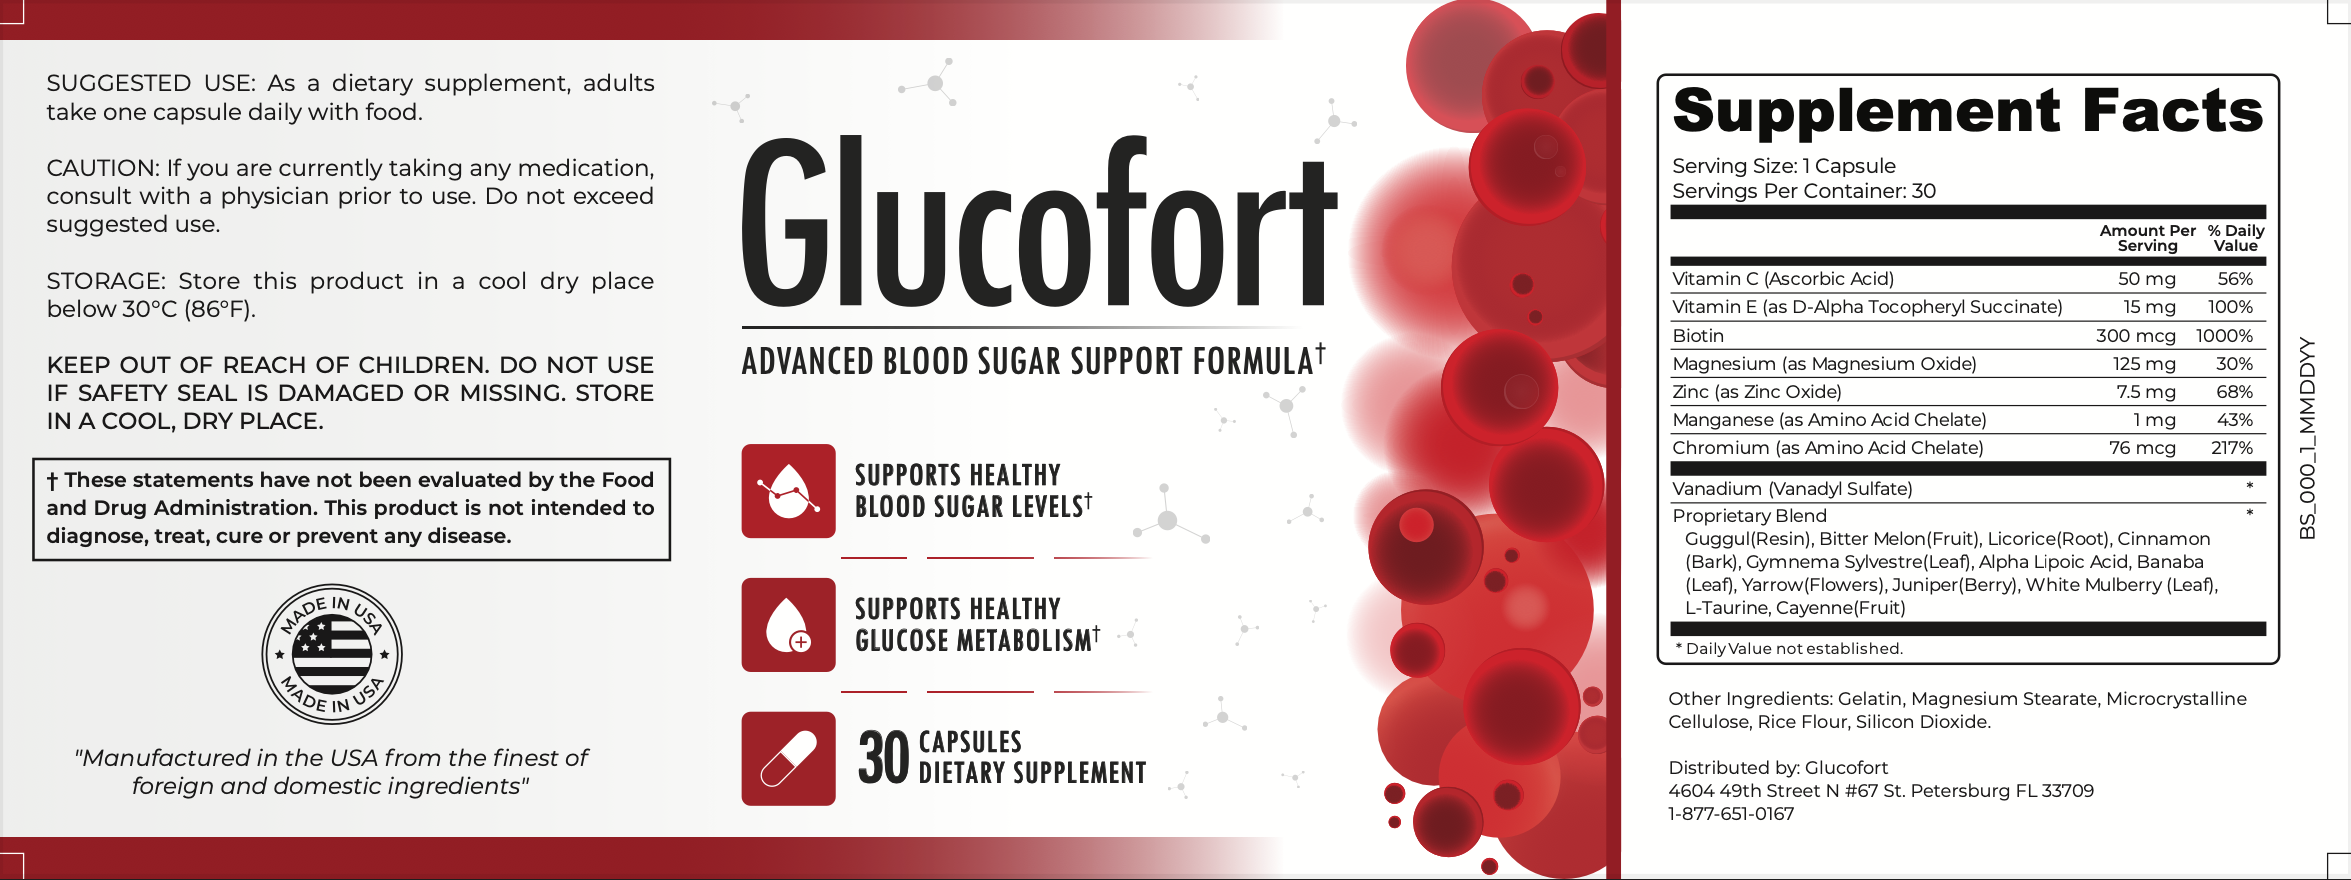 Glucofort Ingredients.png